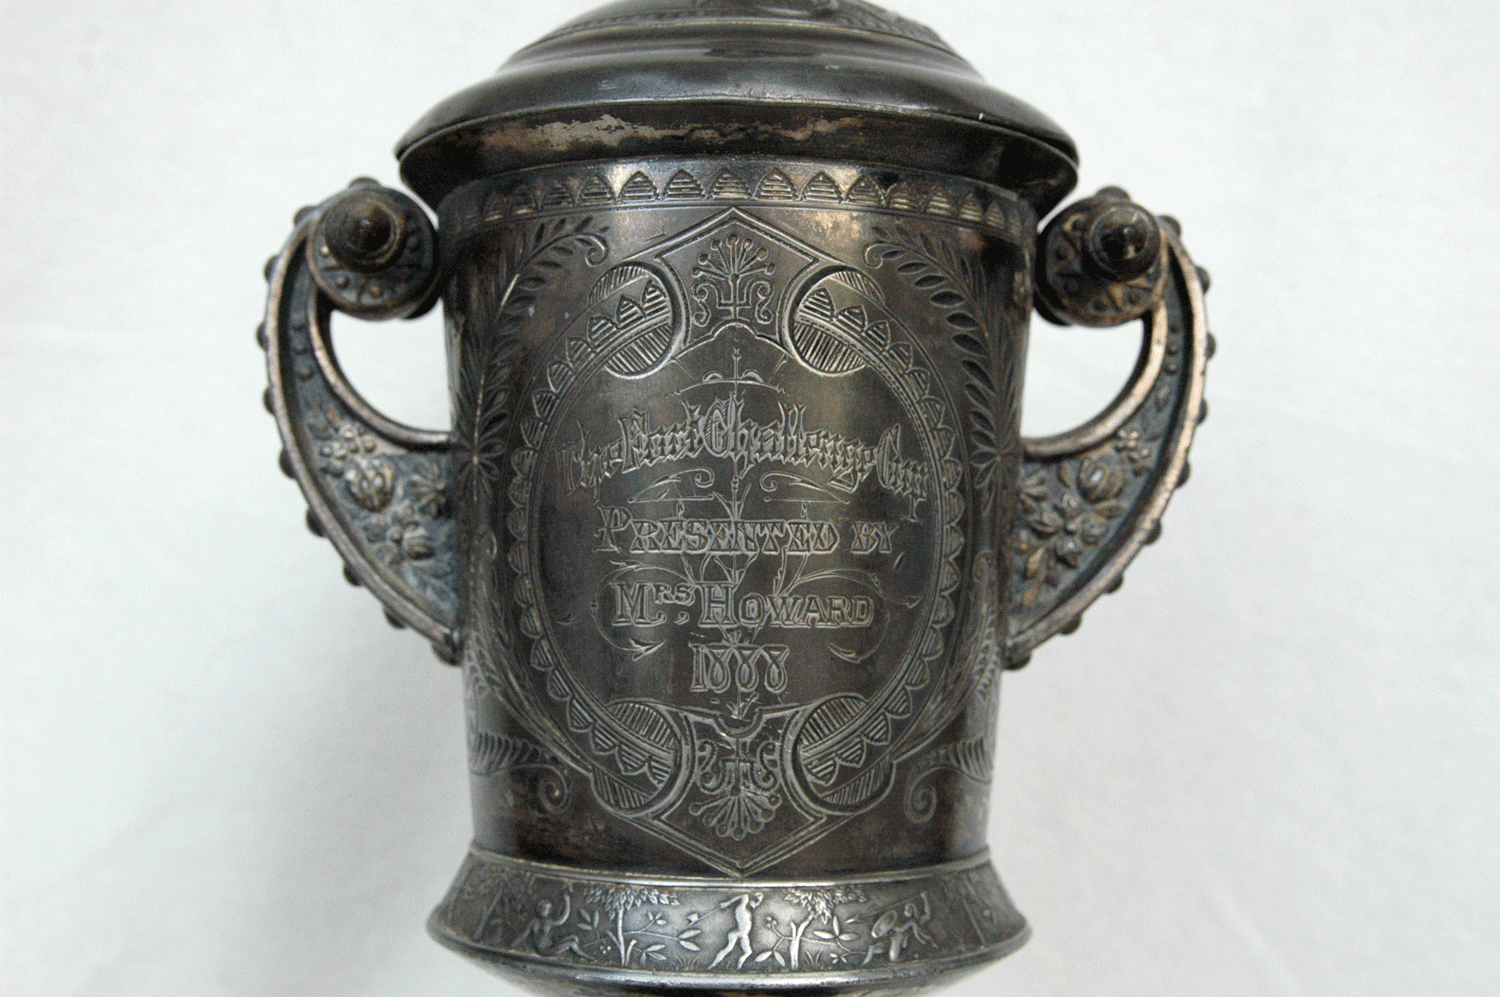 Pokal, 1888, The fark challenge cup presented by Mrs. Howard, Meride Company, versilbert, h= 34 cm - Bild 3 aus 7